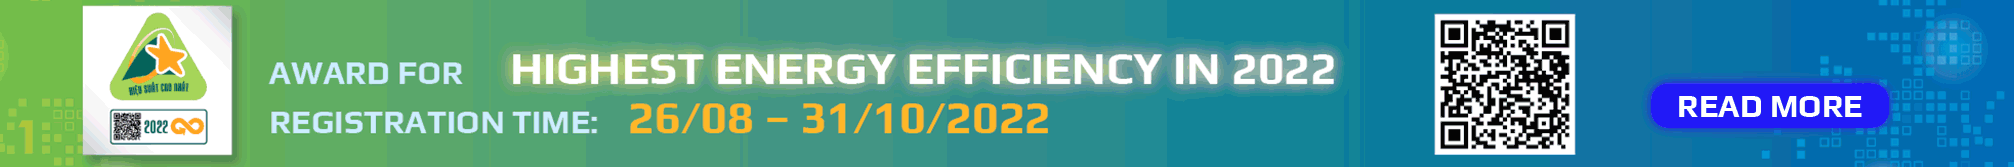 Energy Efficiency Awards 2022